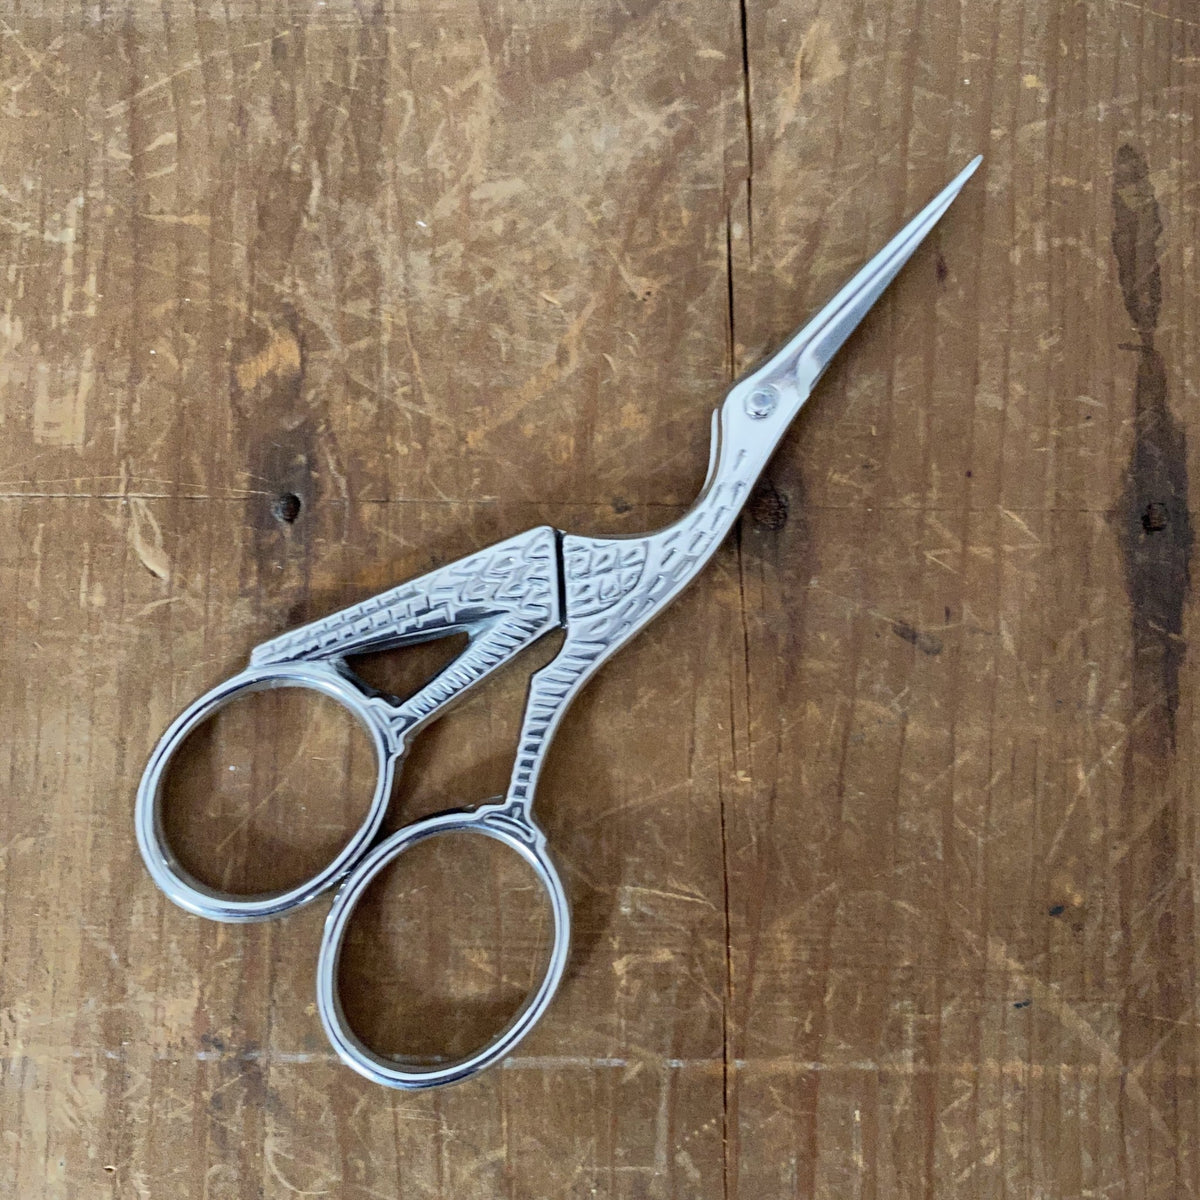 Needlepoint Tools Stainless Steel Crafting Tweezers Scissors